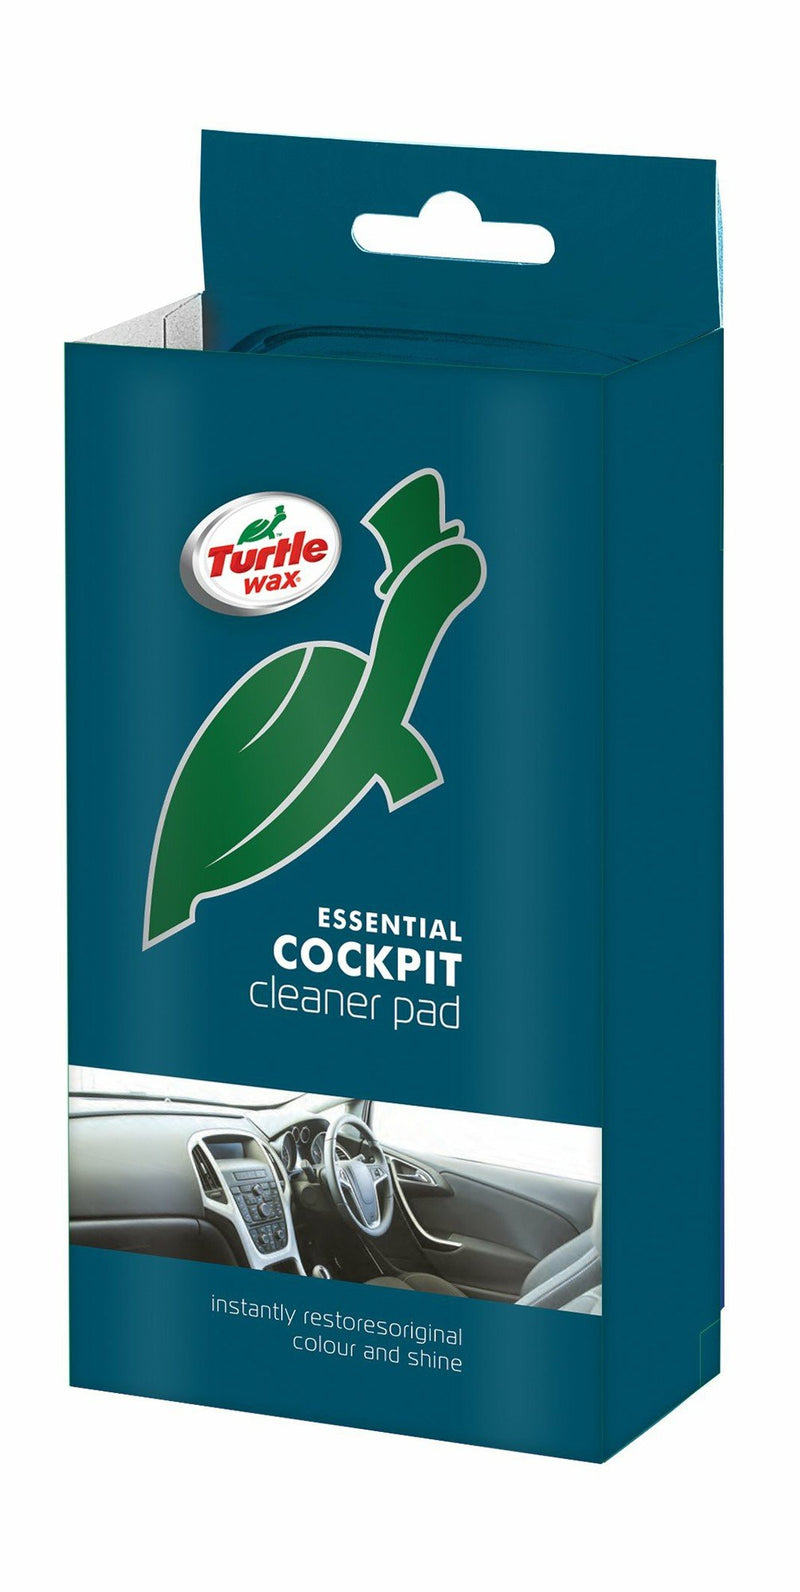 Turtle wax - Cockpit cleaner pad